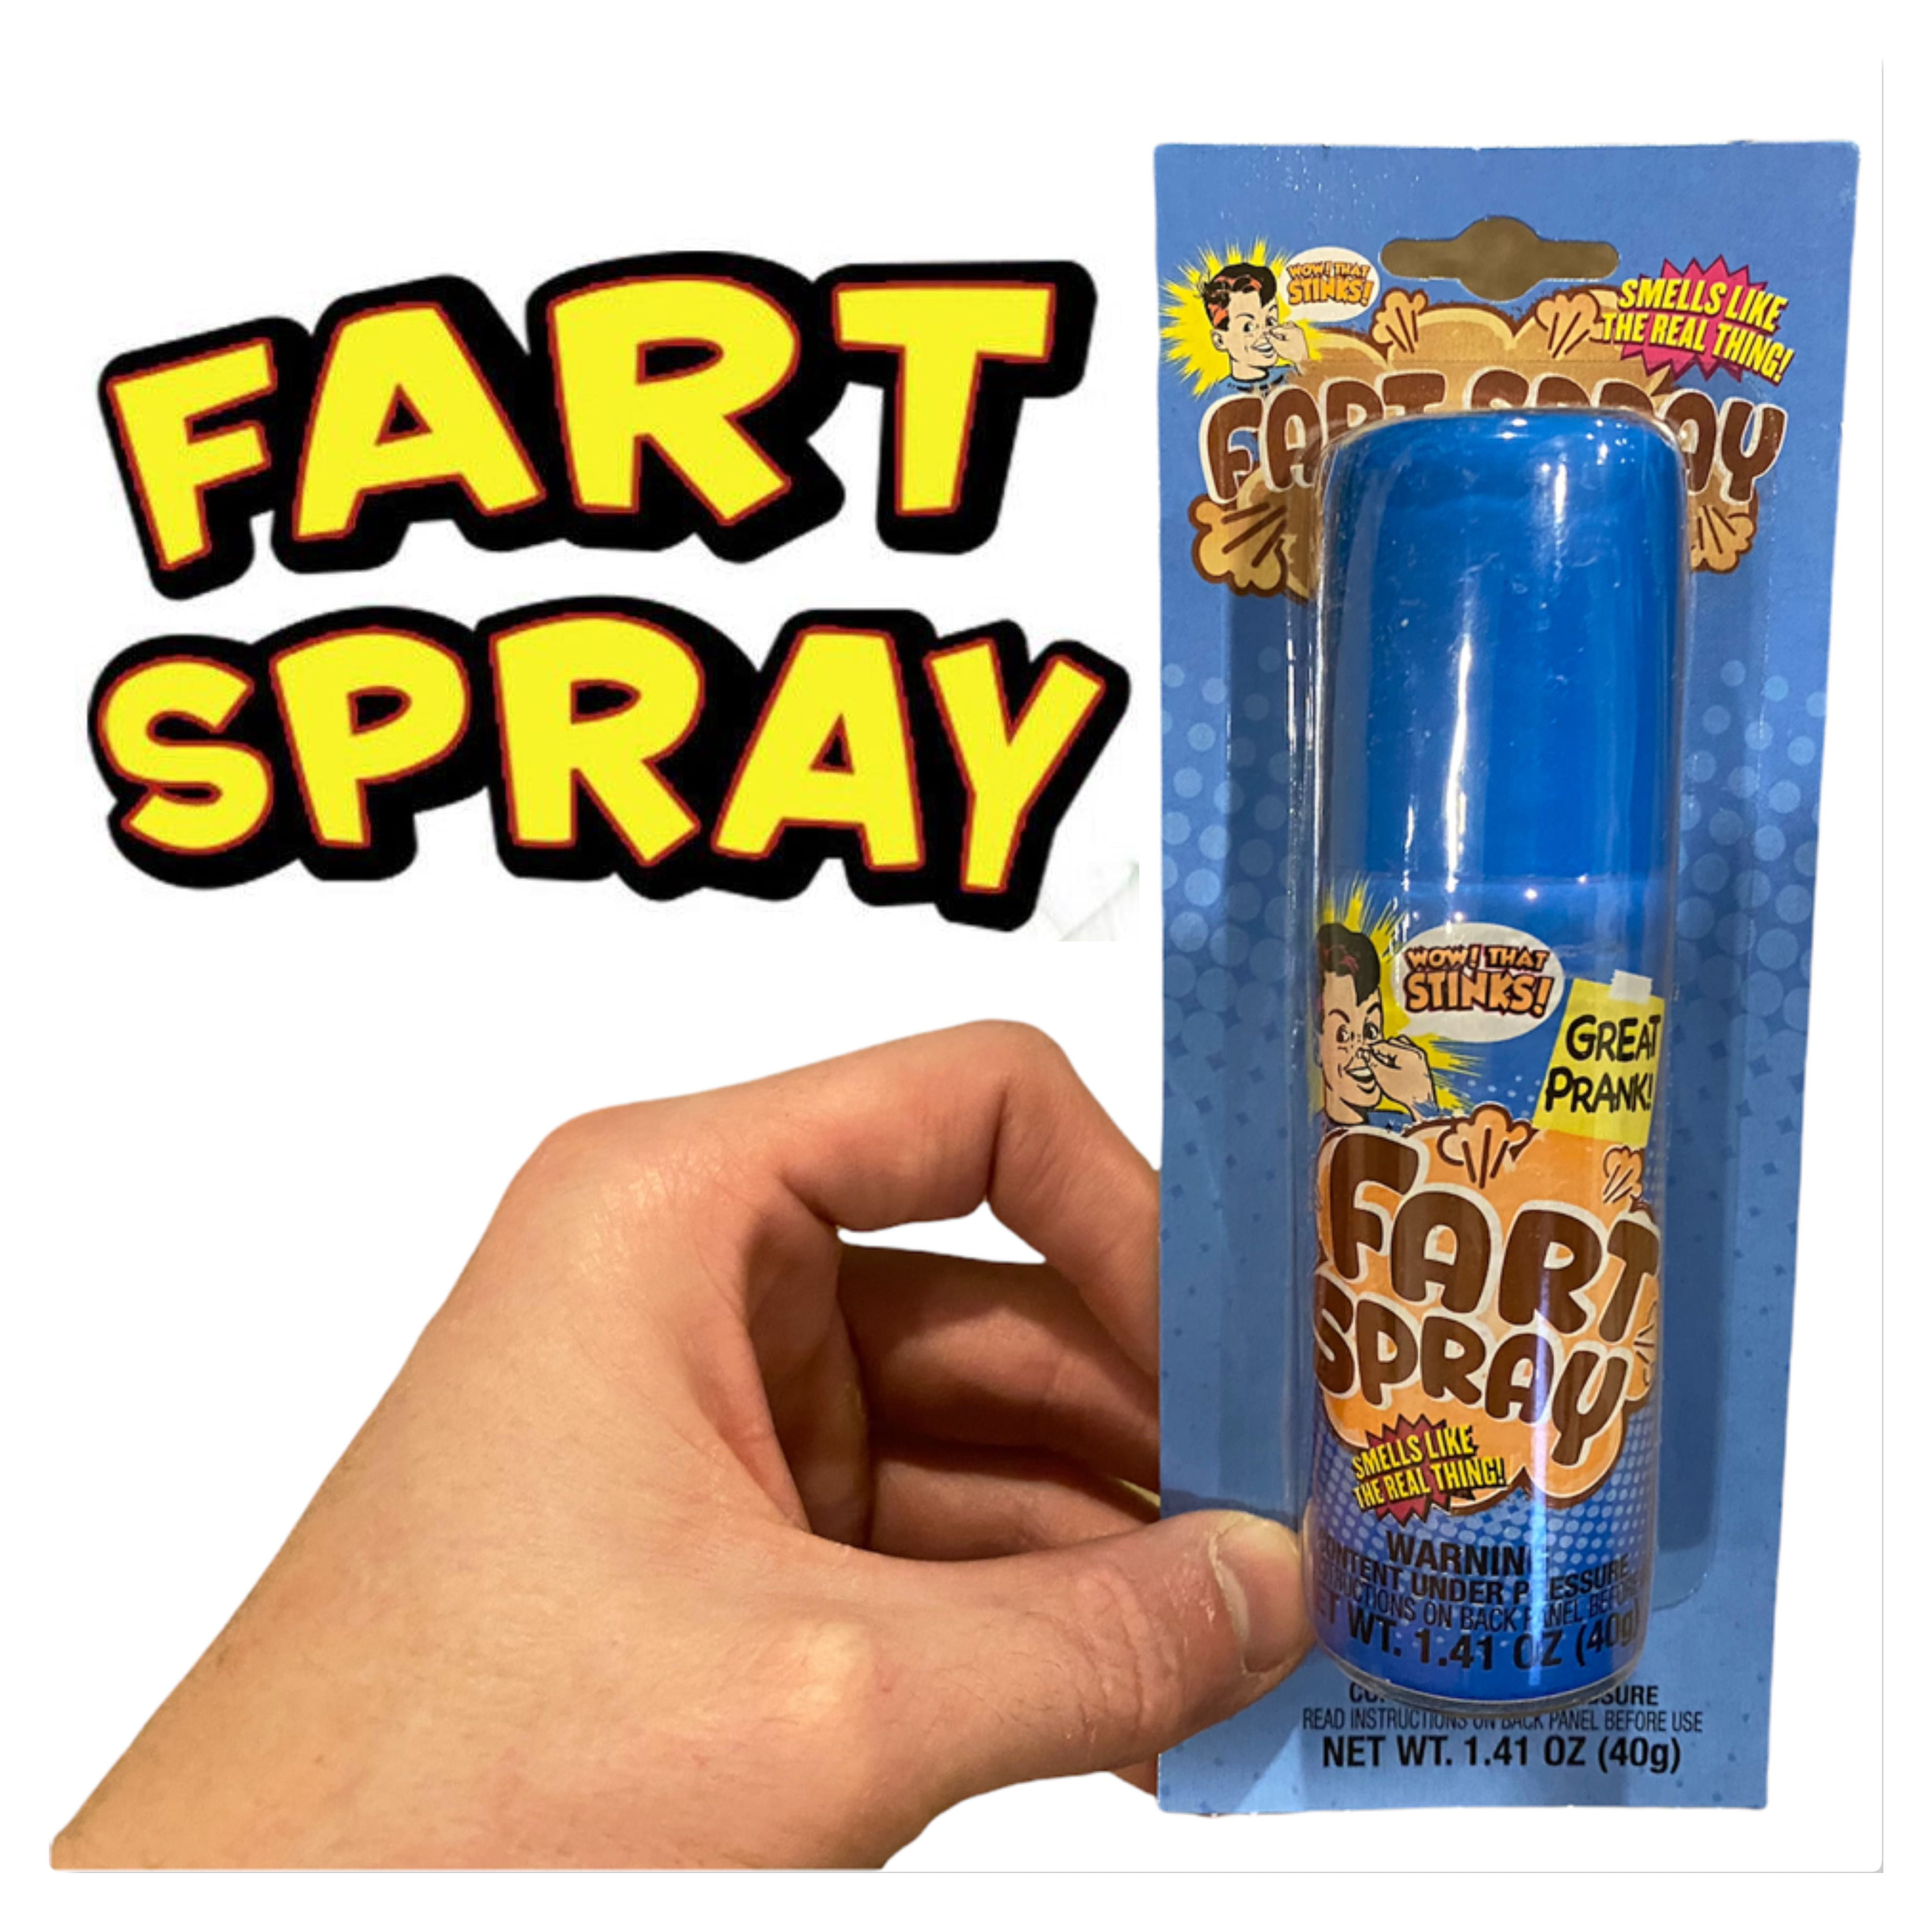 LARGE FART SPRAY CAN - GaG Liquid Stinky Poop Ass Turd Vomit Puke